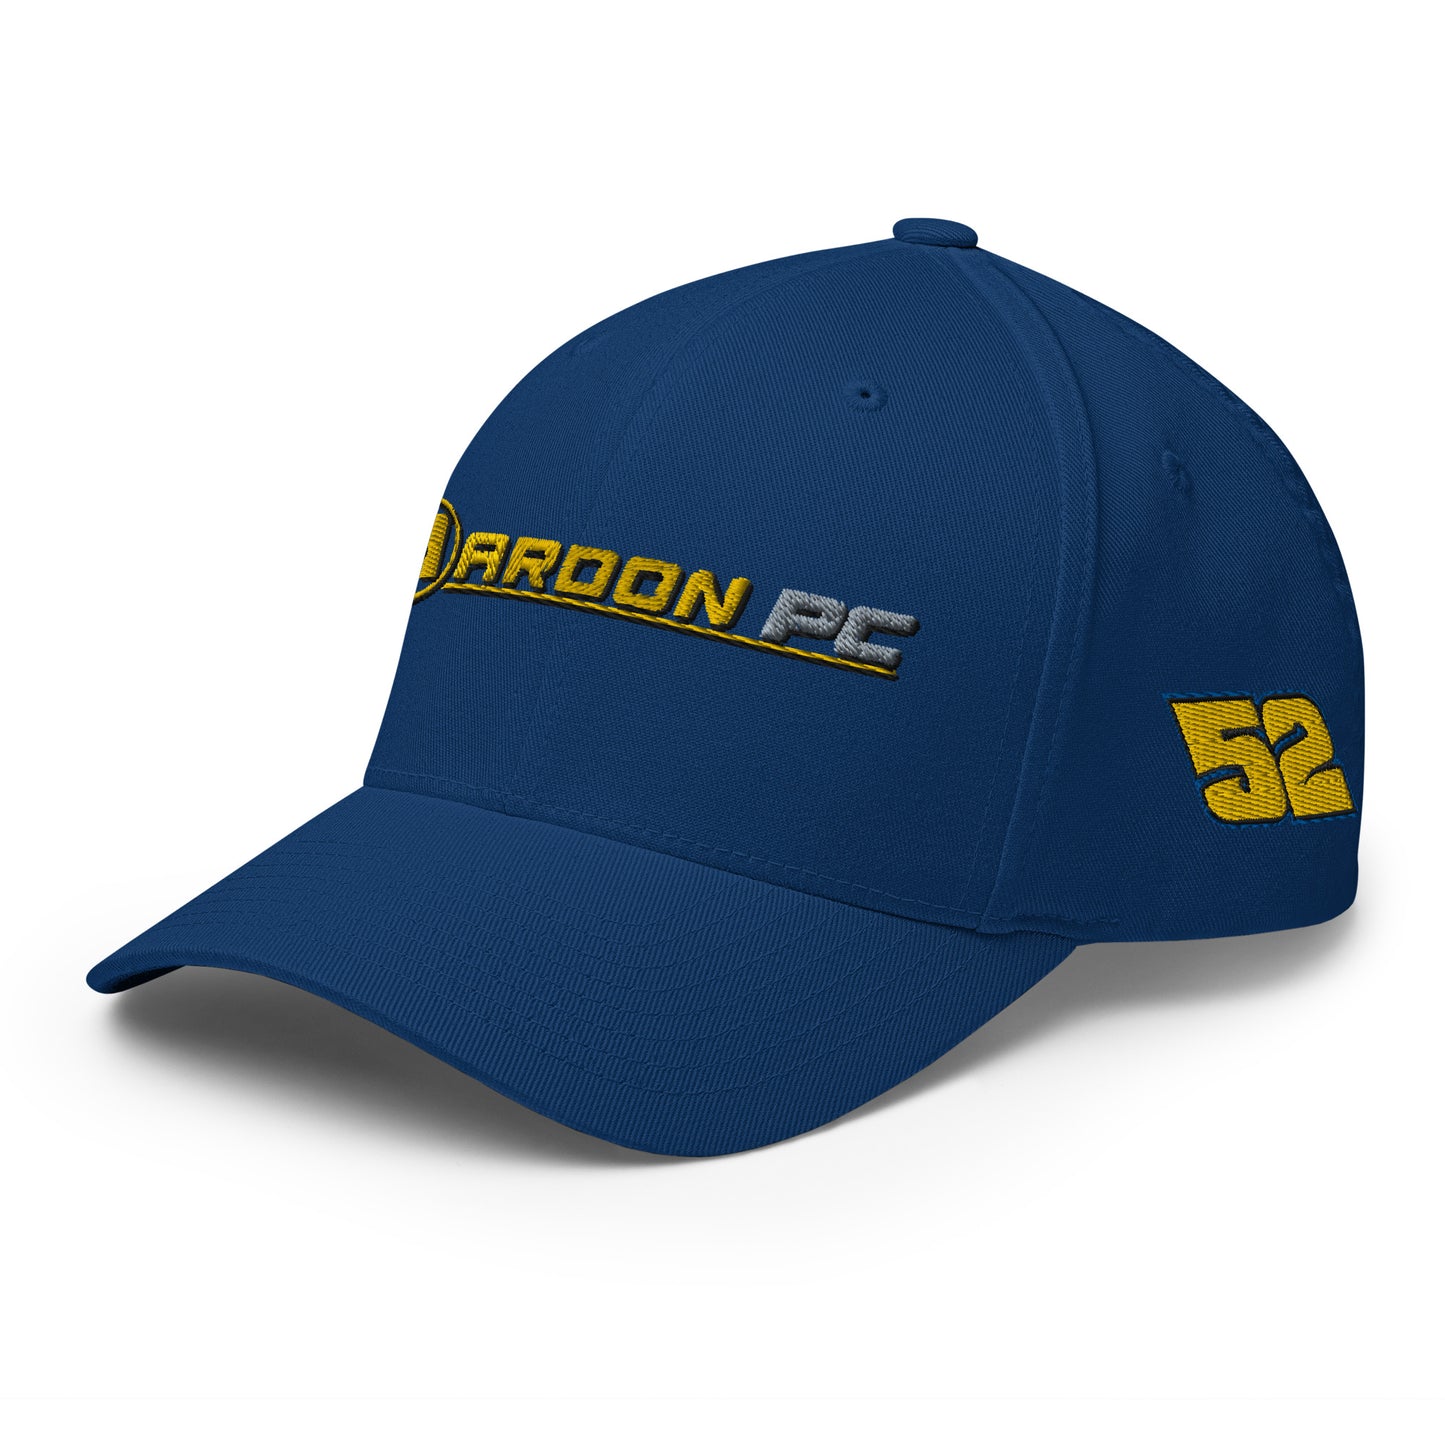 MARDON PC 52 Hat